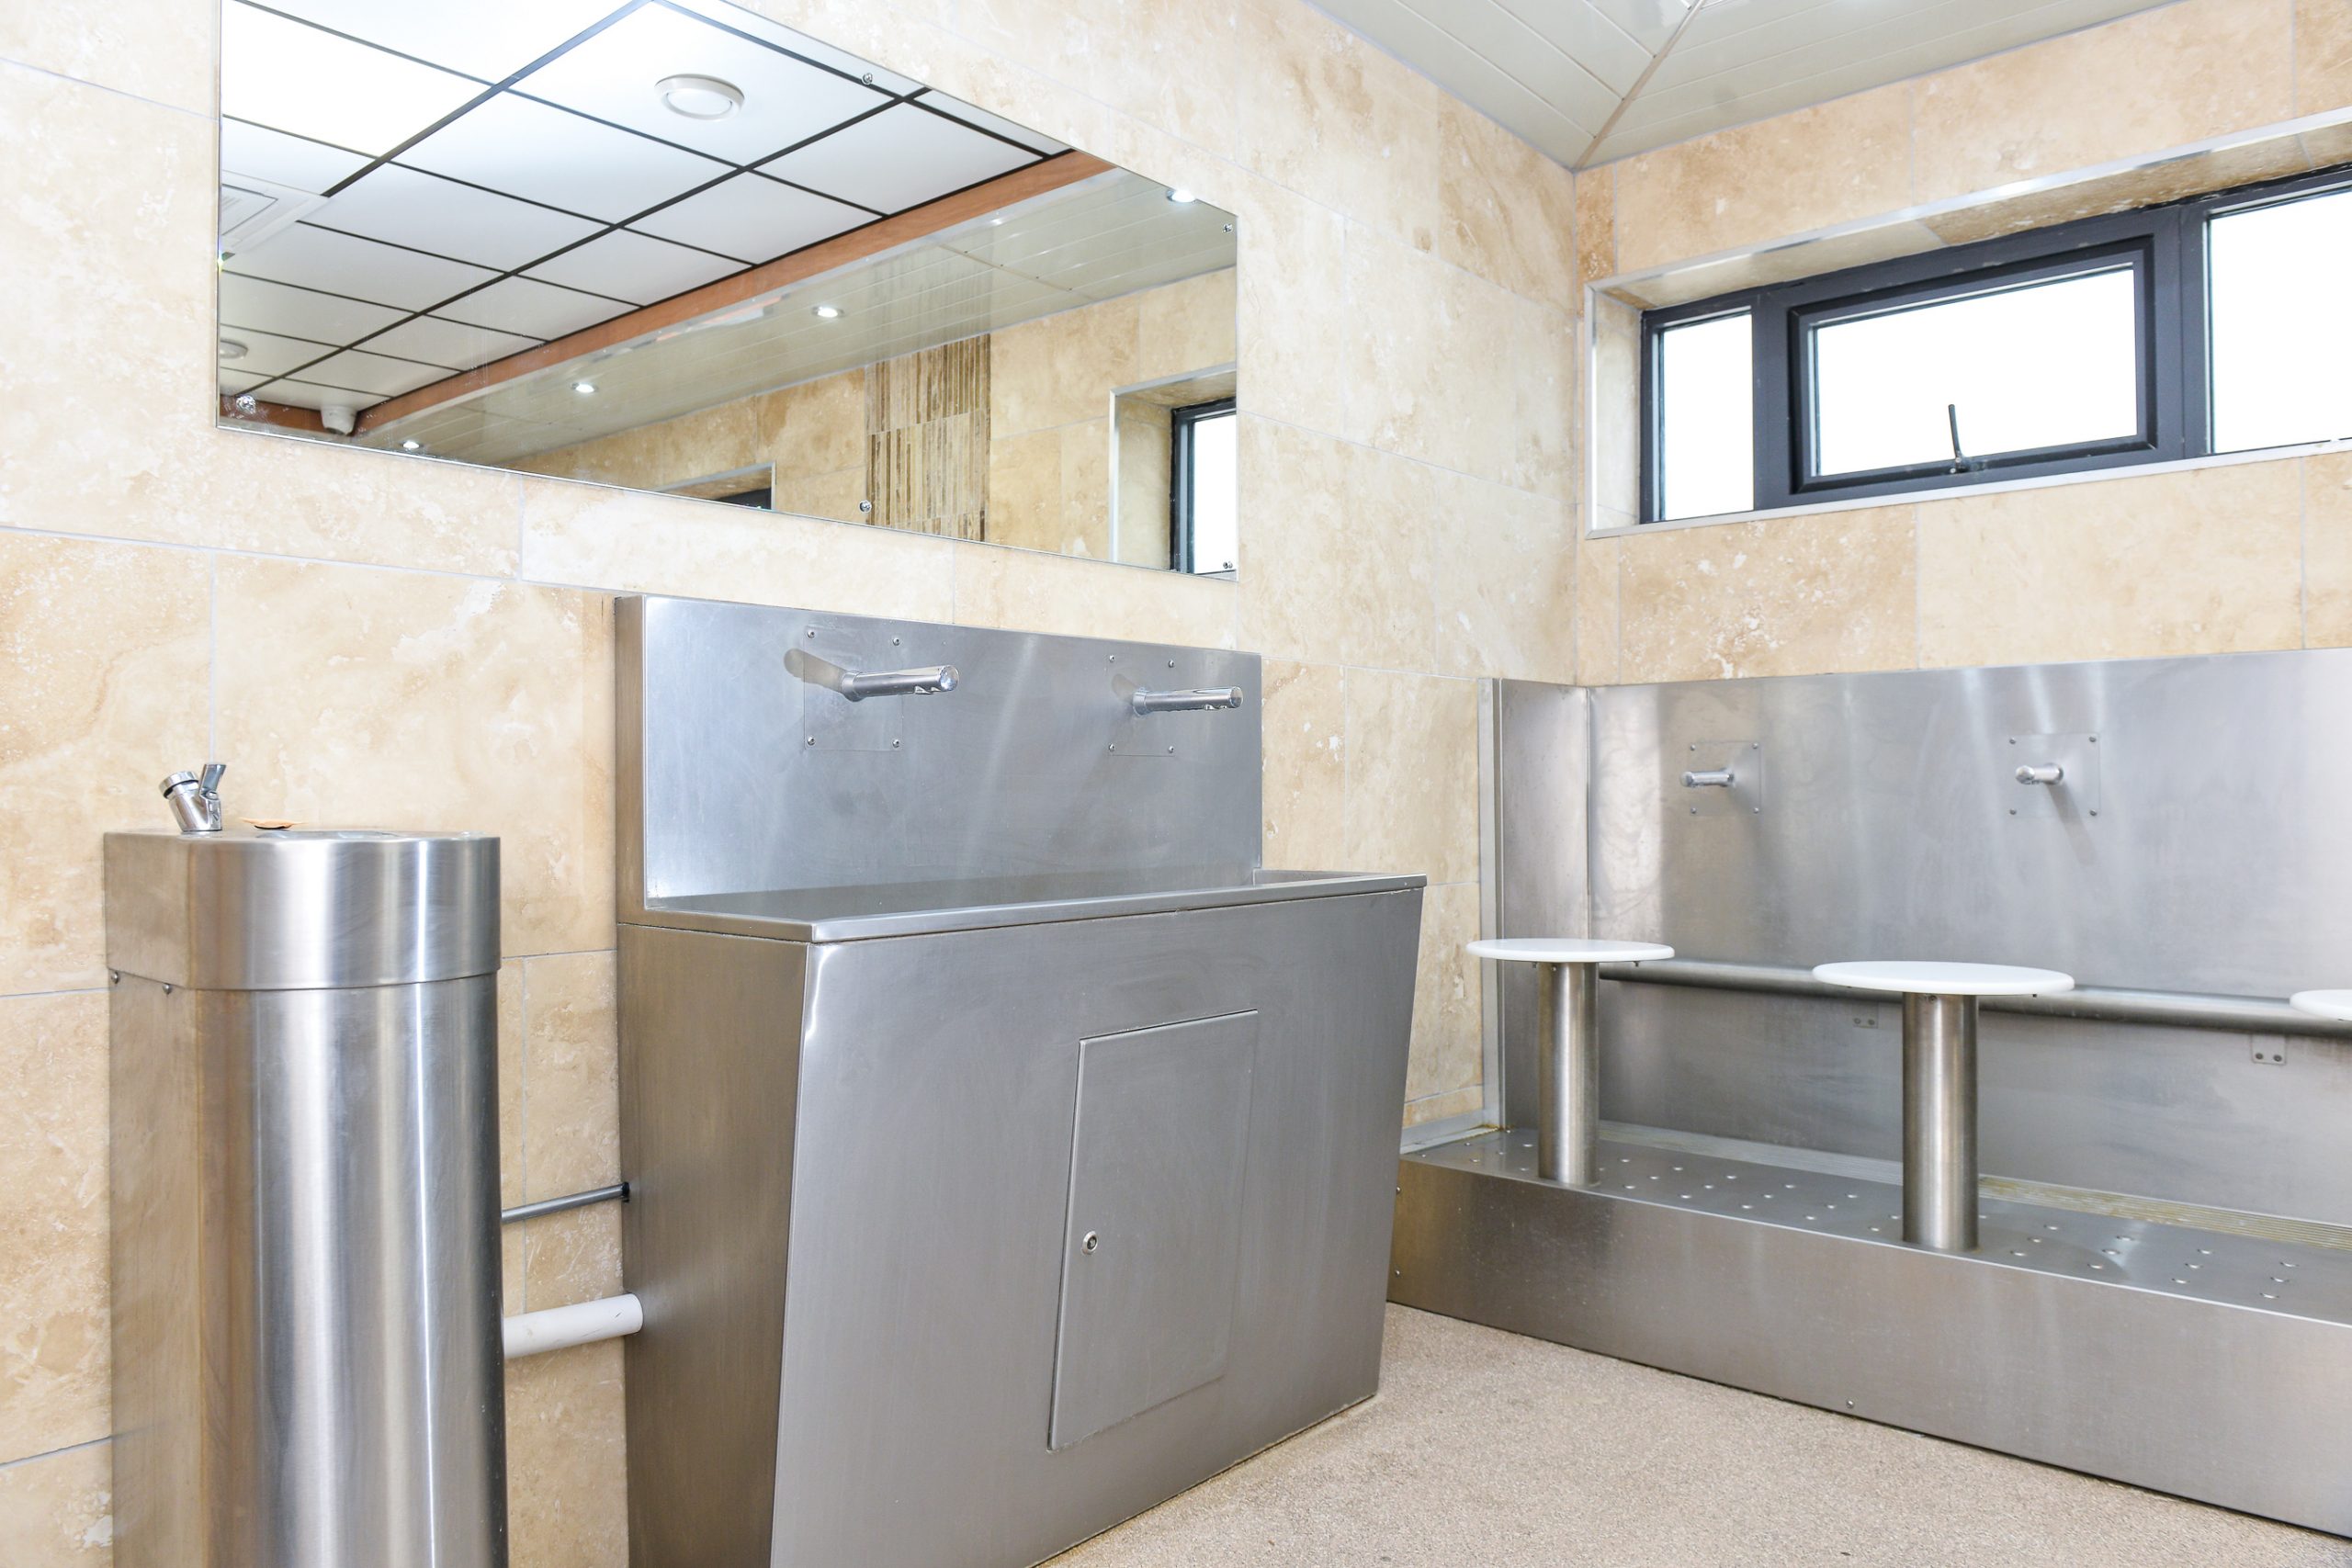 New Sink Waste Disposal Units